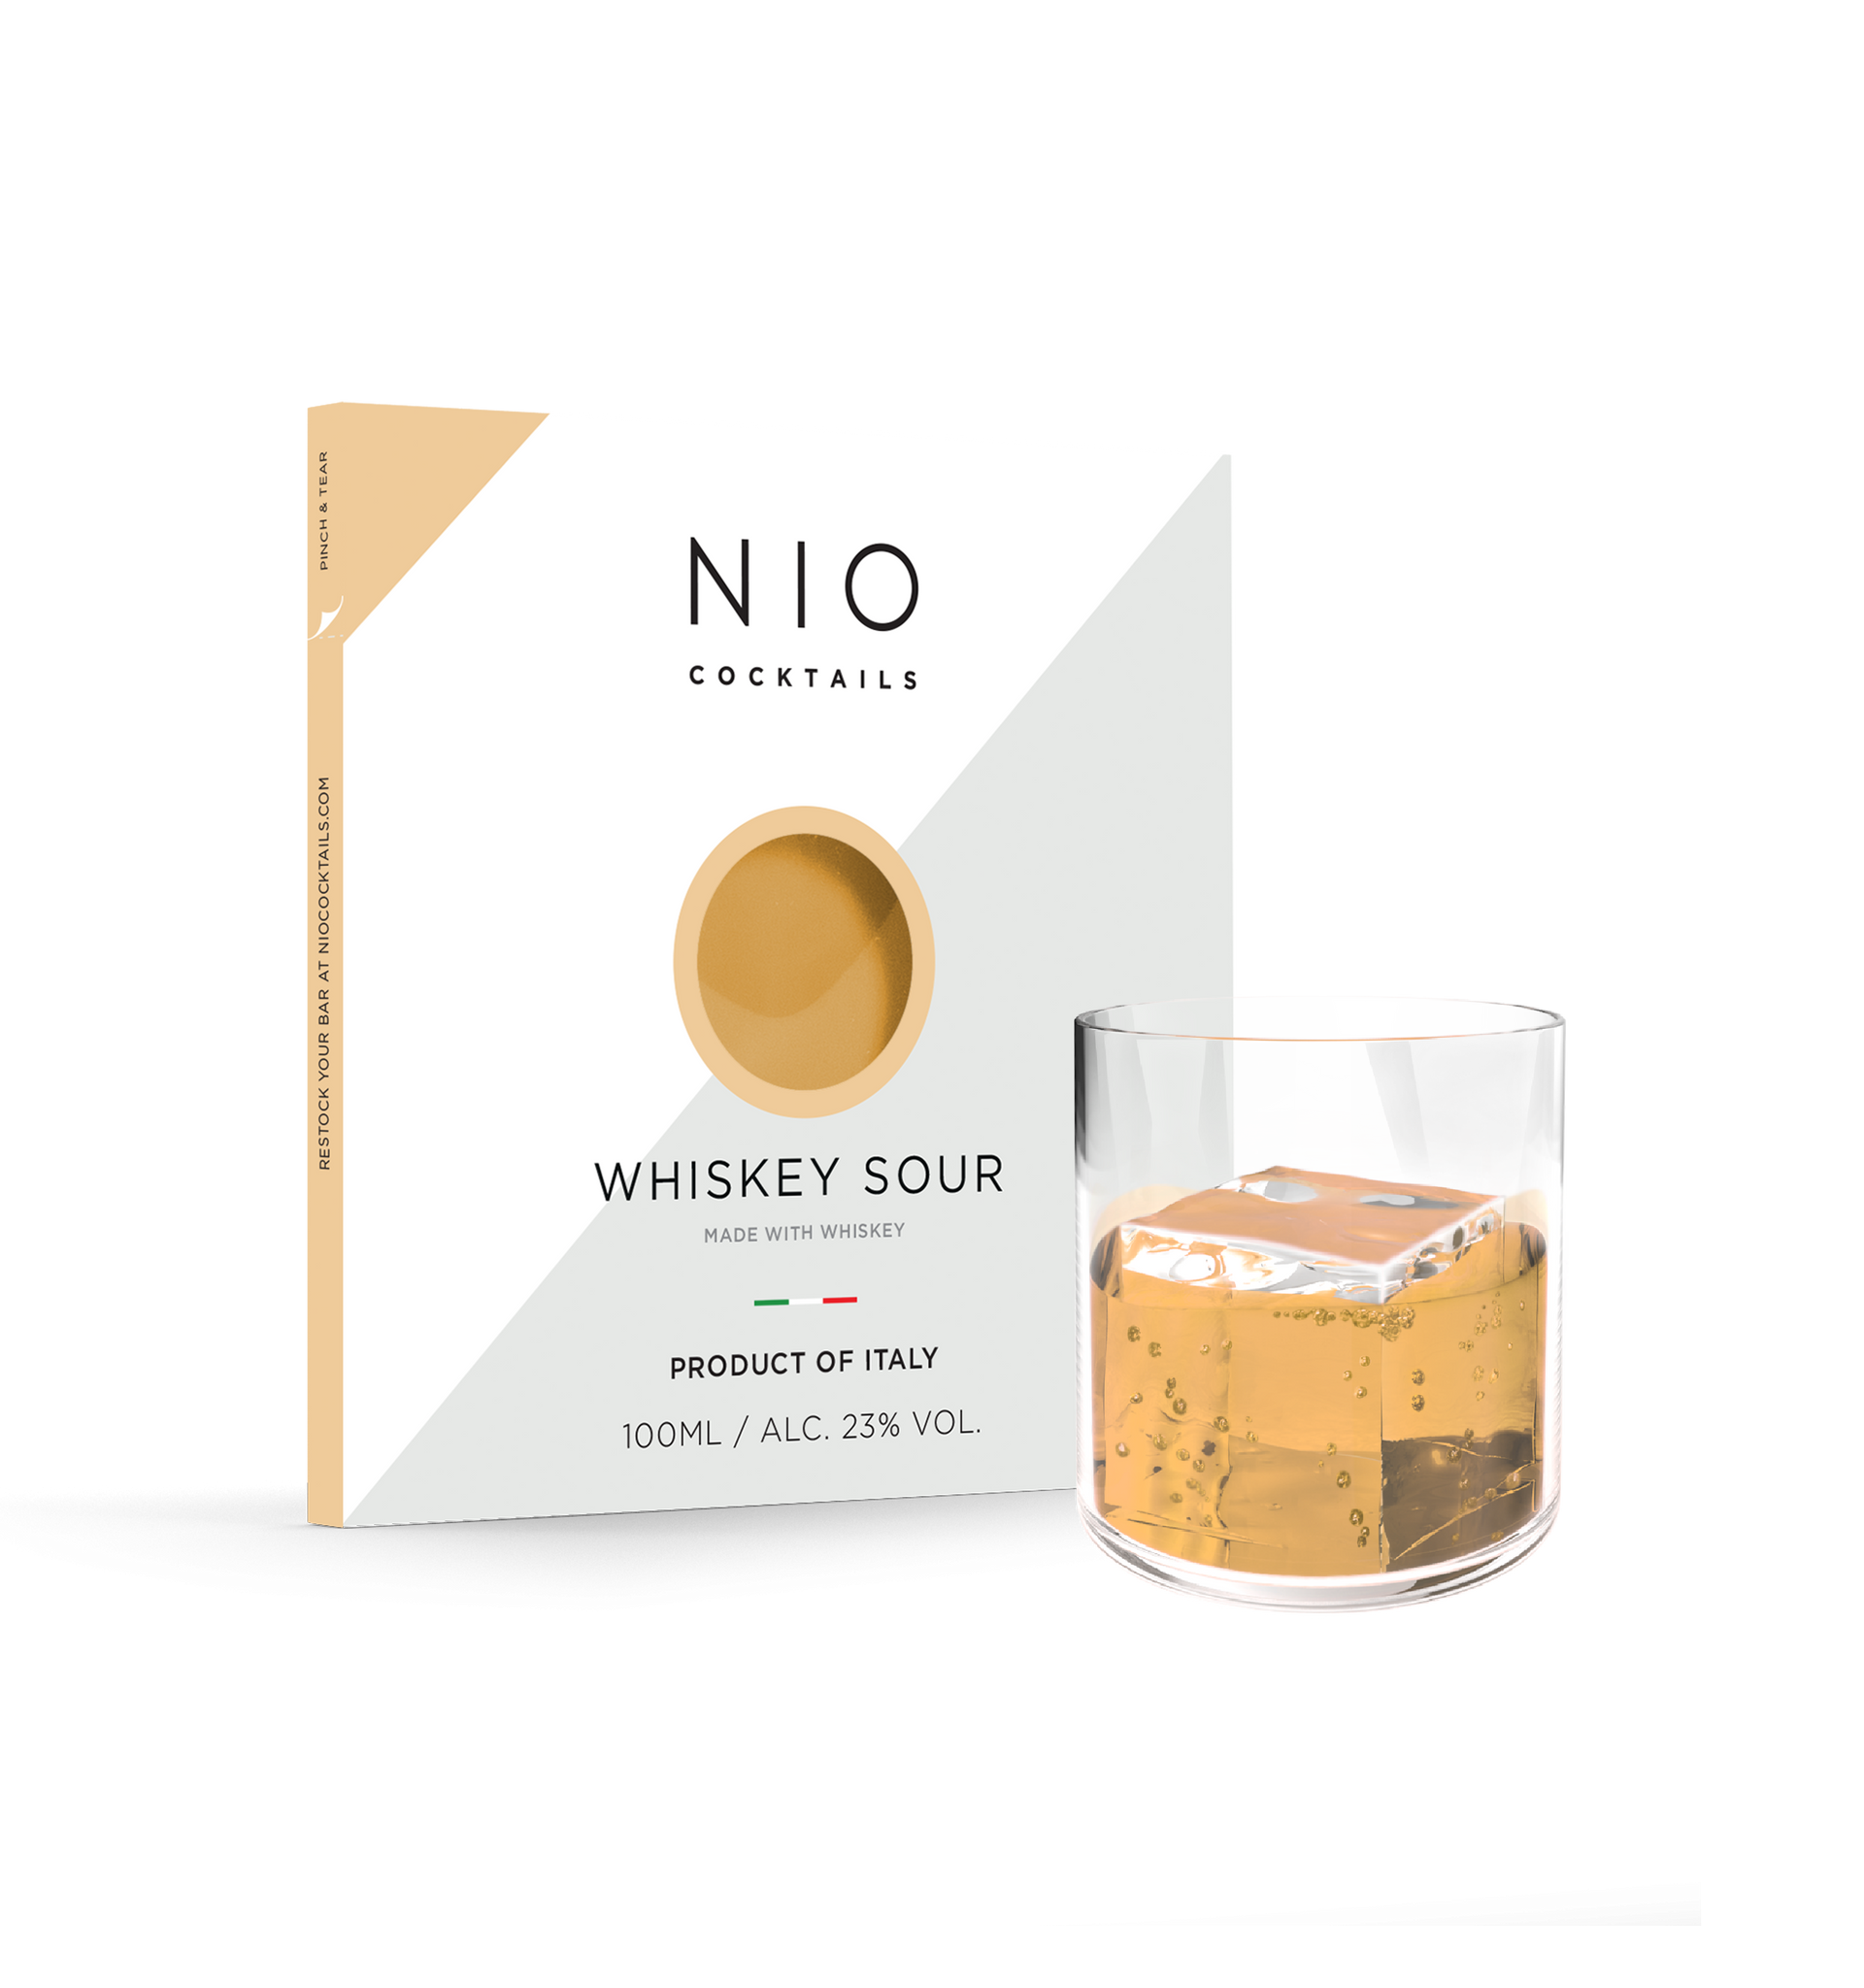 NIO COCKTAILS Whiskey Sour glass